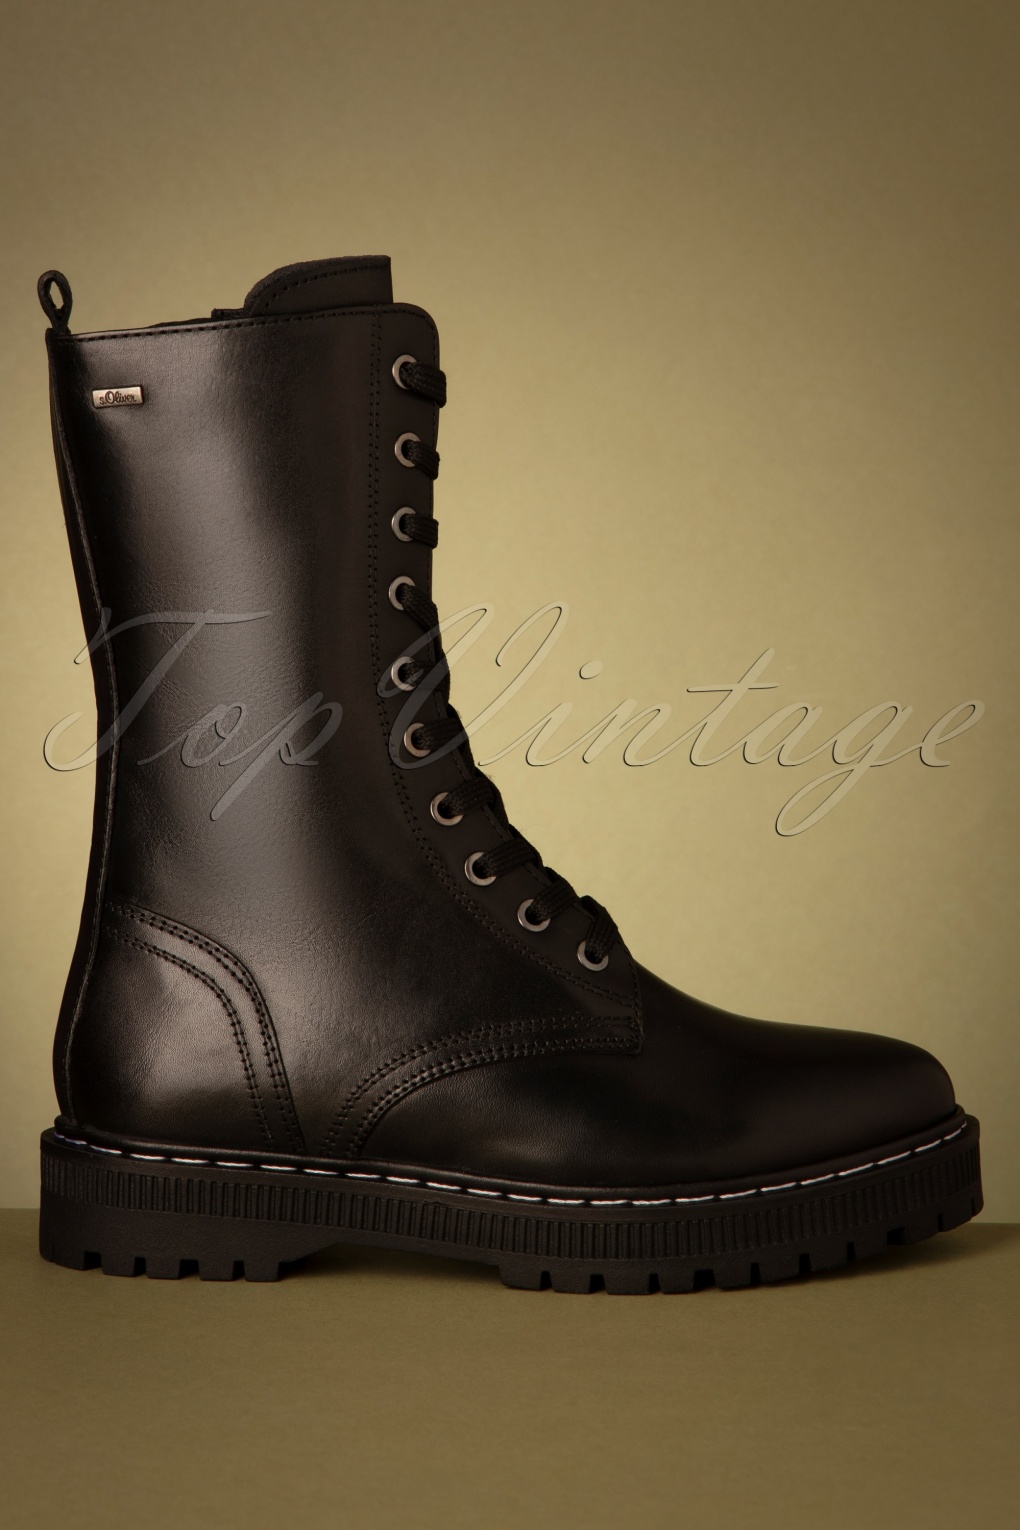 Hassy Utrolig Snestorm s.Oliver | 70s Leather Combat Look Boots in Black